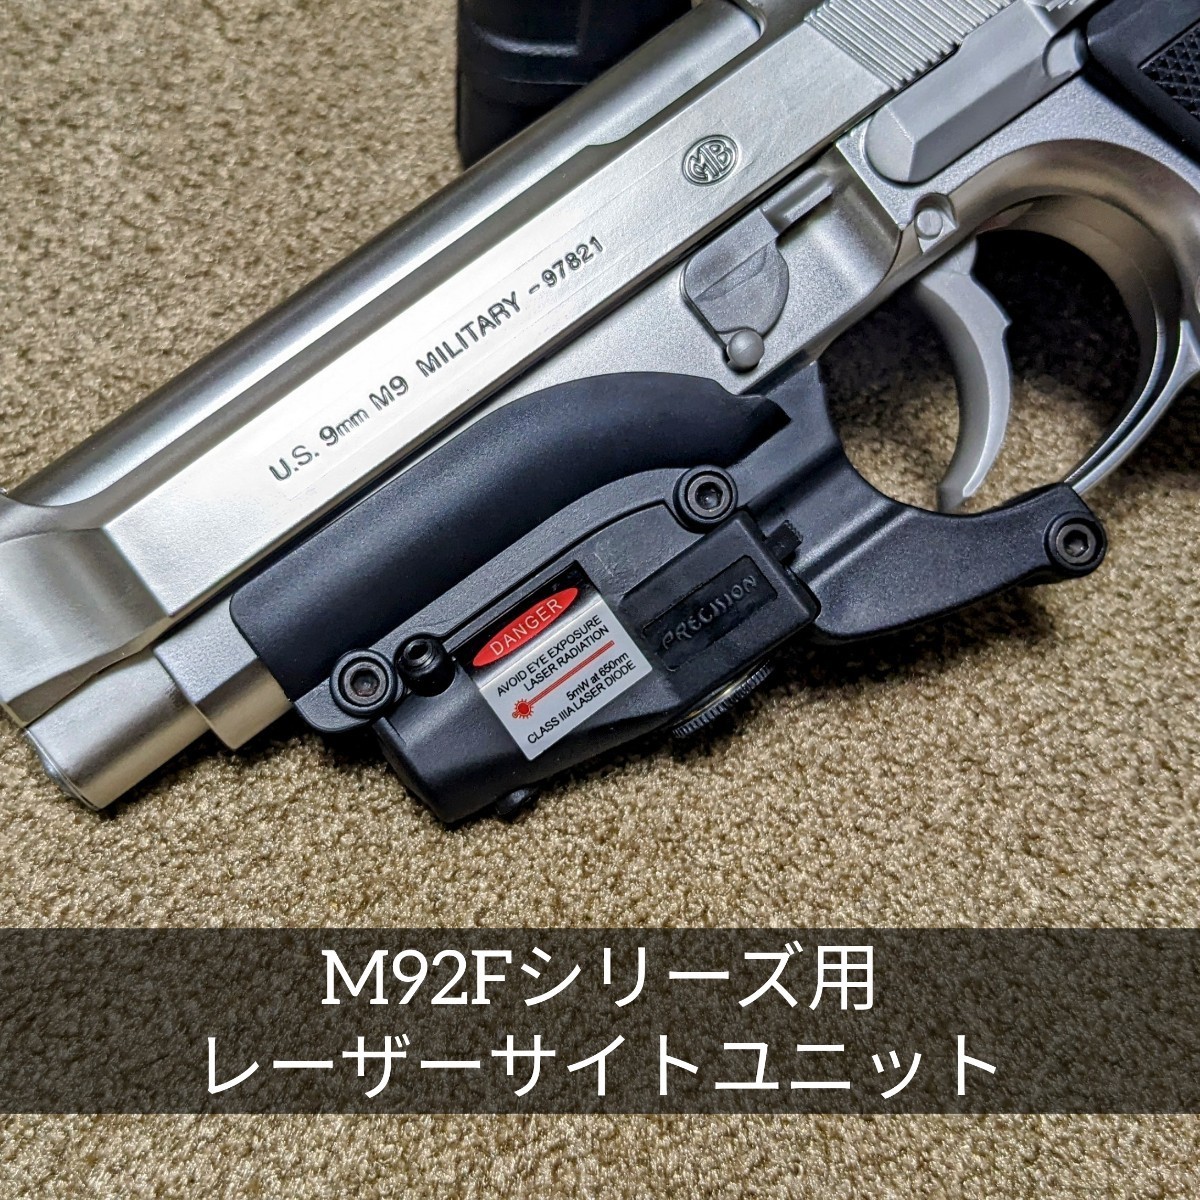 M92F] レーザーサイトユニット トイガン用 海外製 / ベレッタ M9